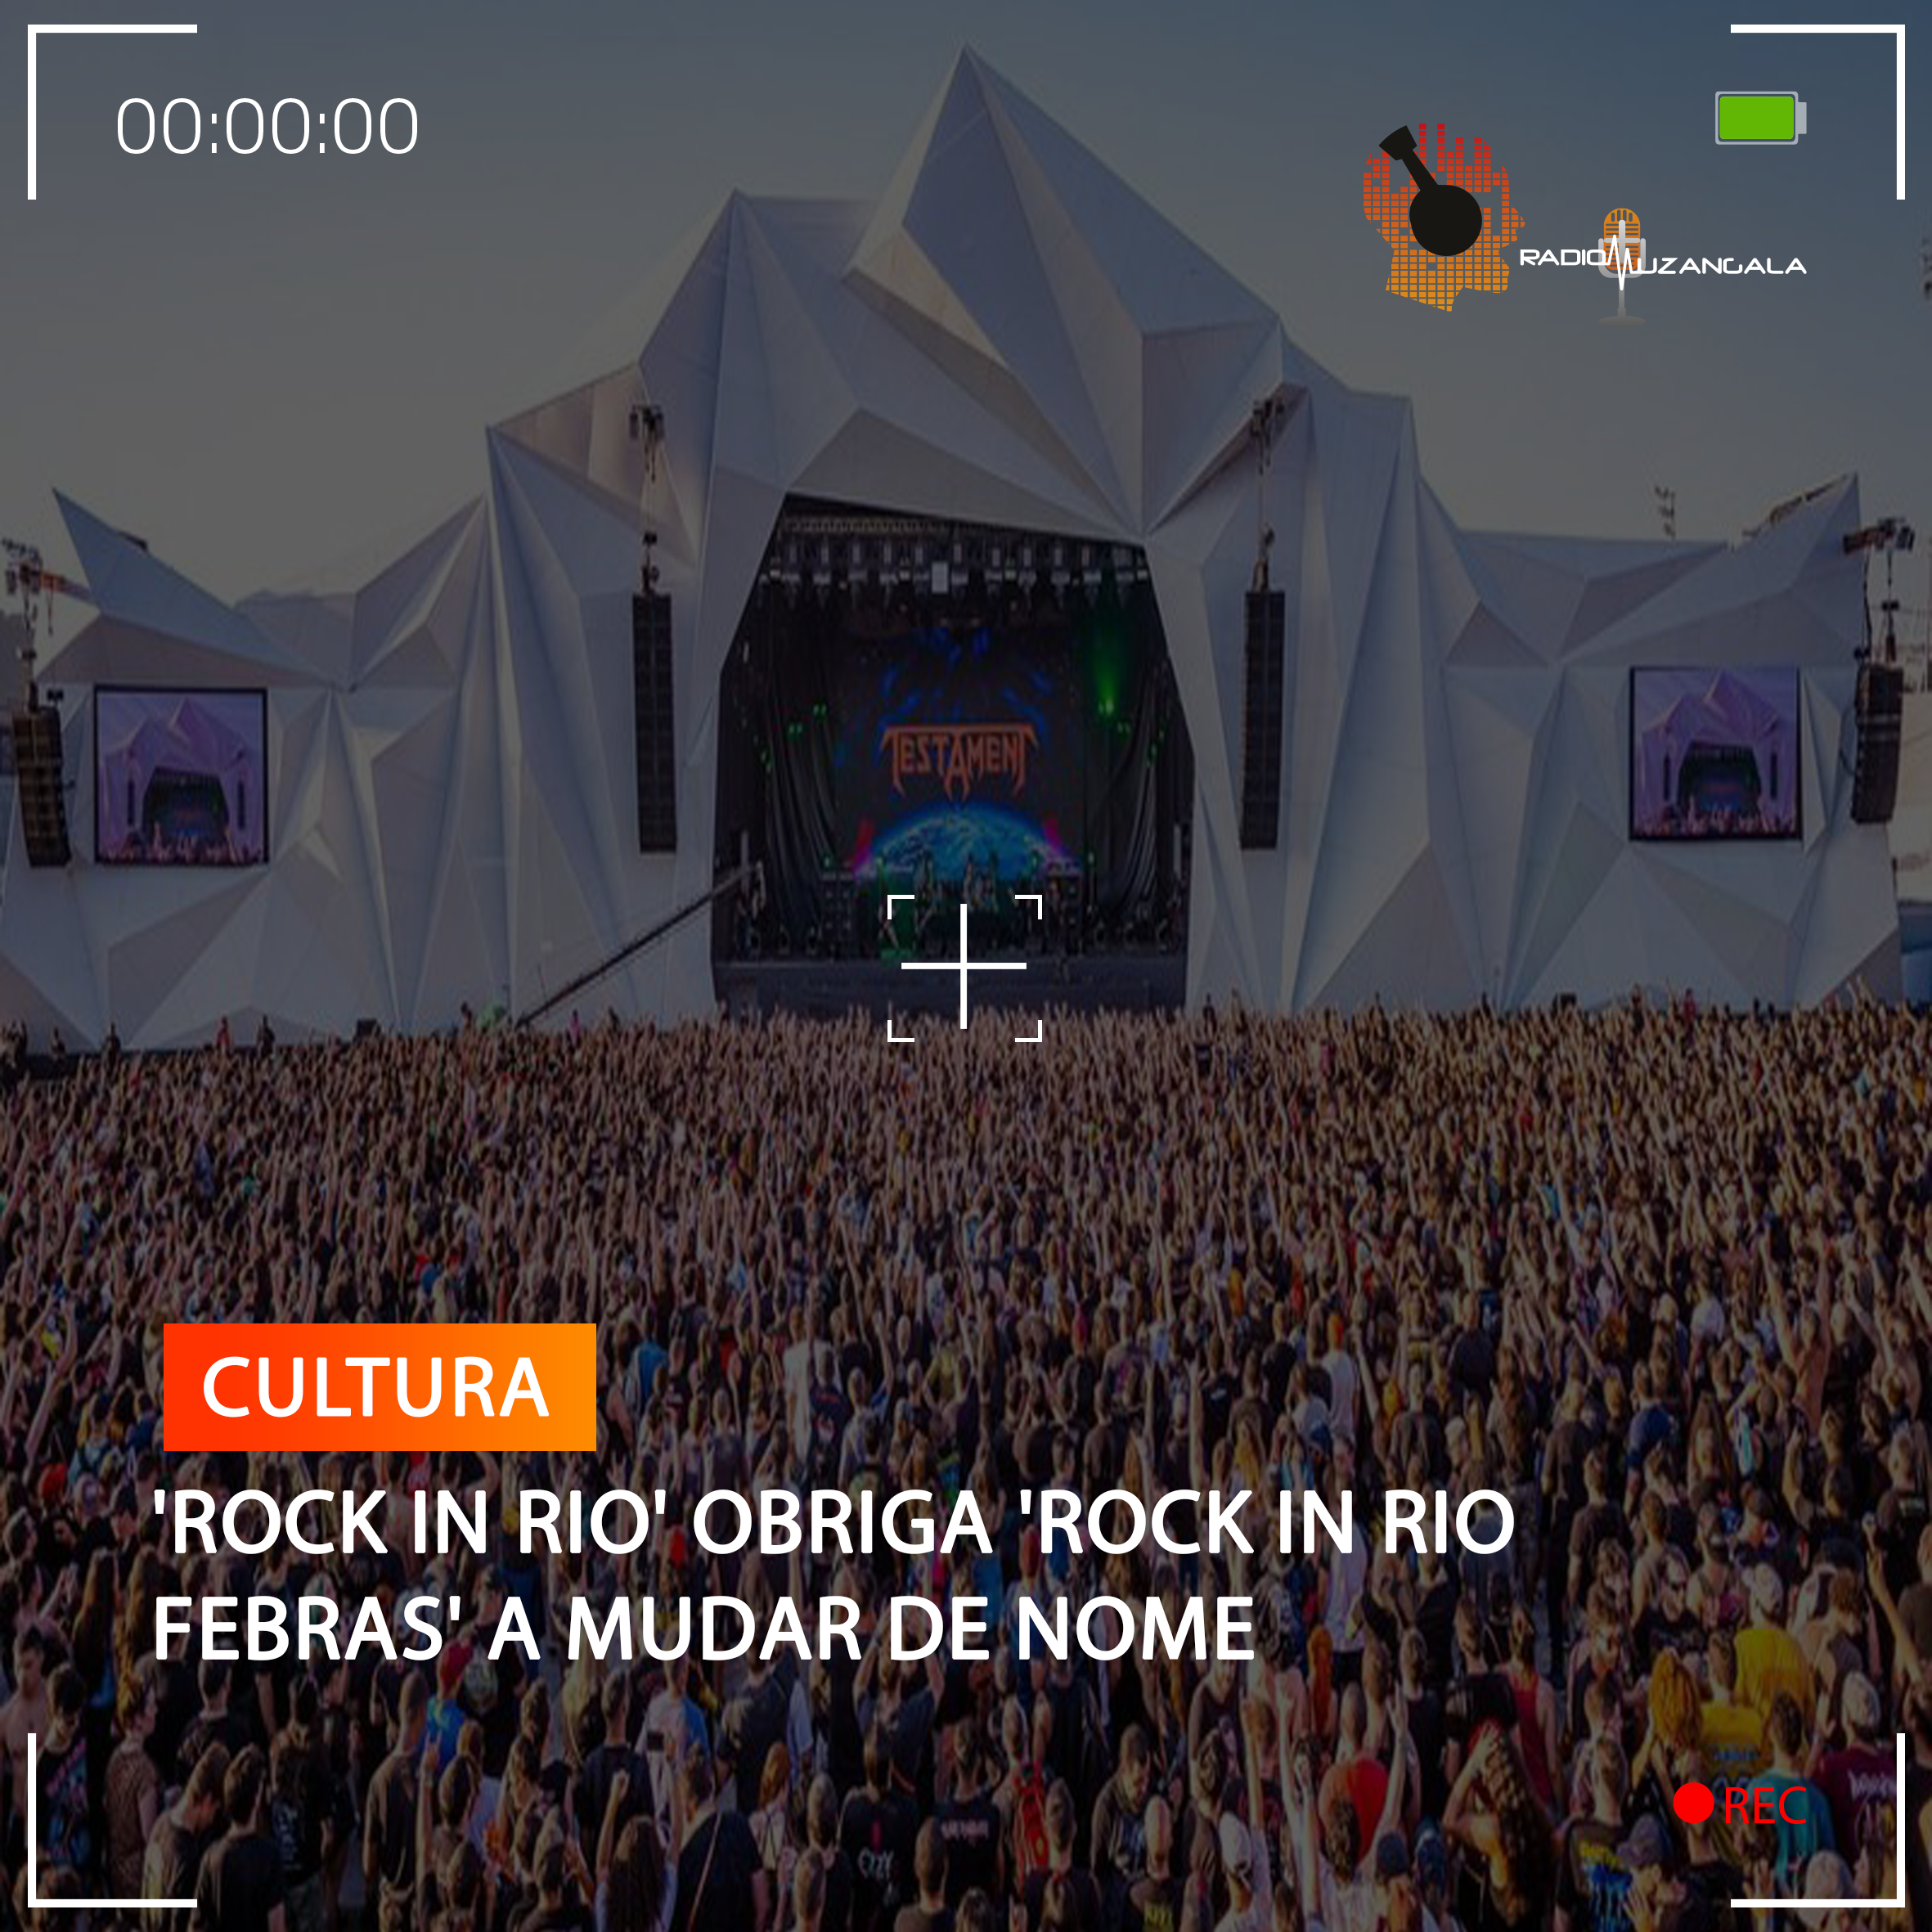  ‘ROCK IN RIO’ OBRIGA ‘ROCK IN RIO FEBRAS’ A MUDAR DE NOME